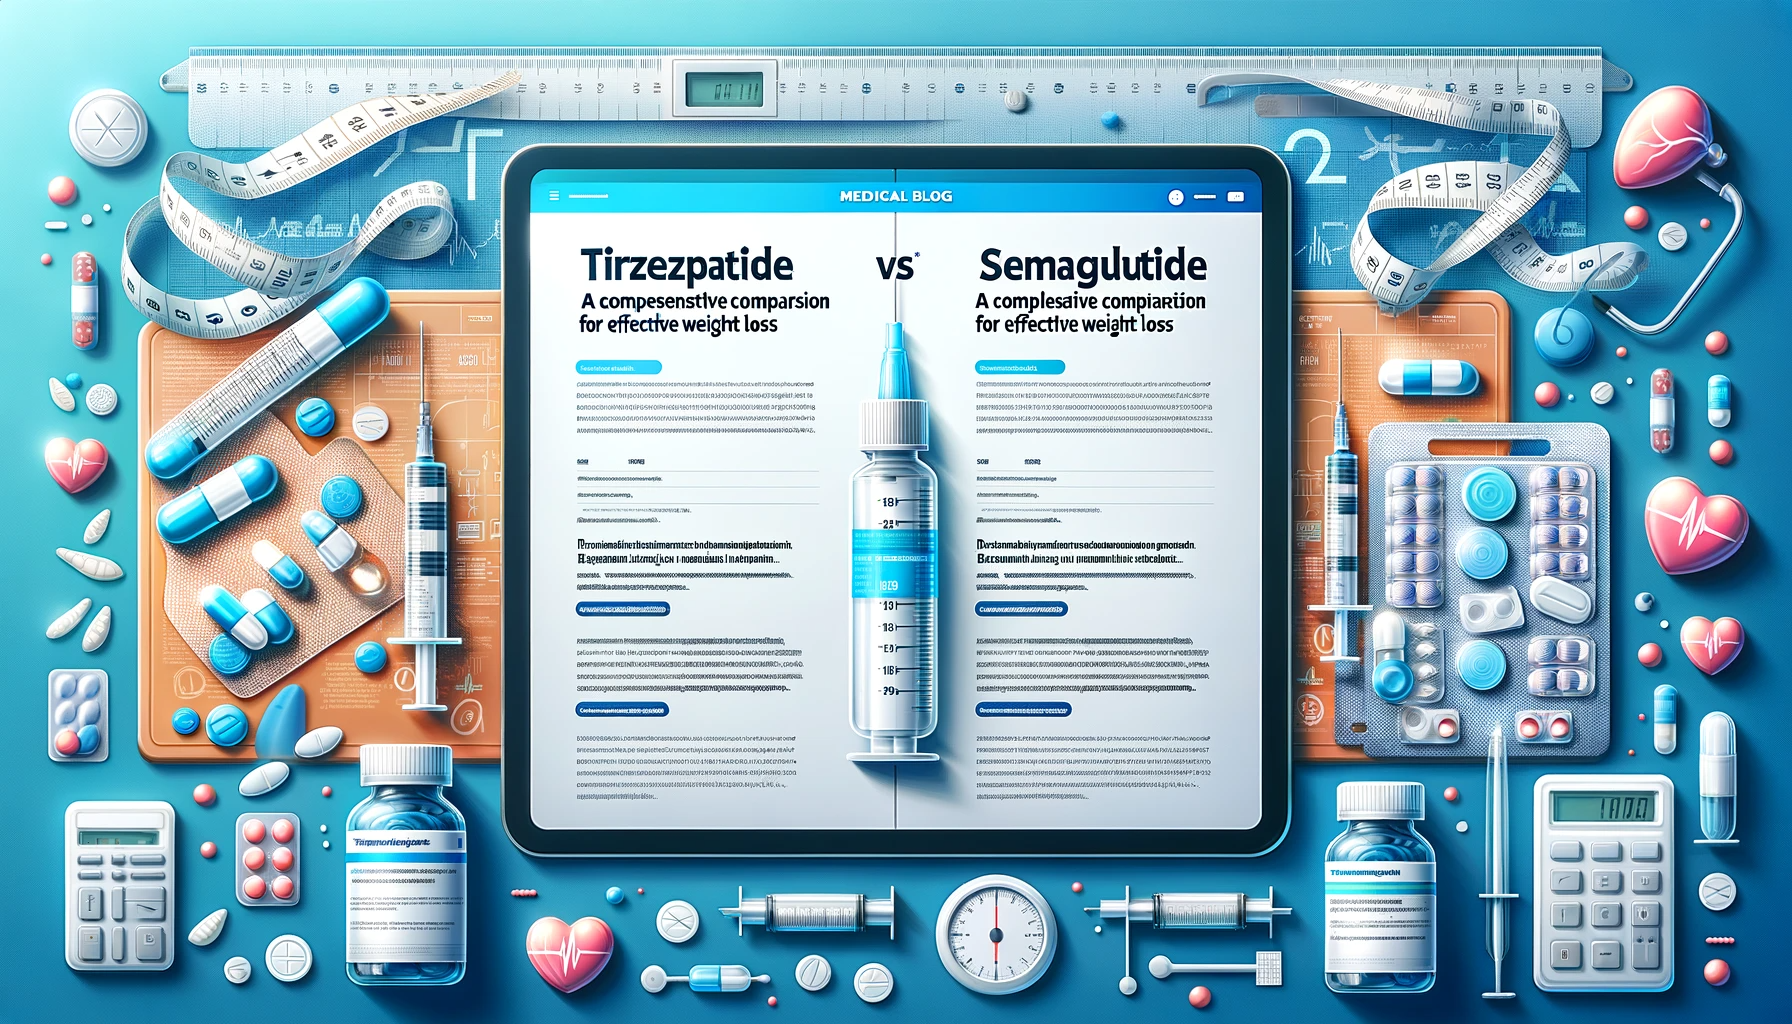 Tirzepatide vs Semaglutide: A Comprehensive Comparison for Effective Weight Loss